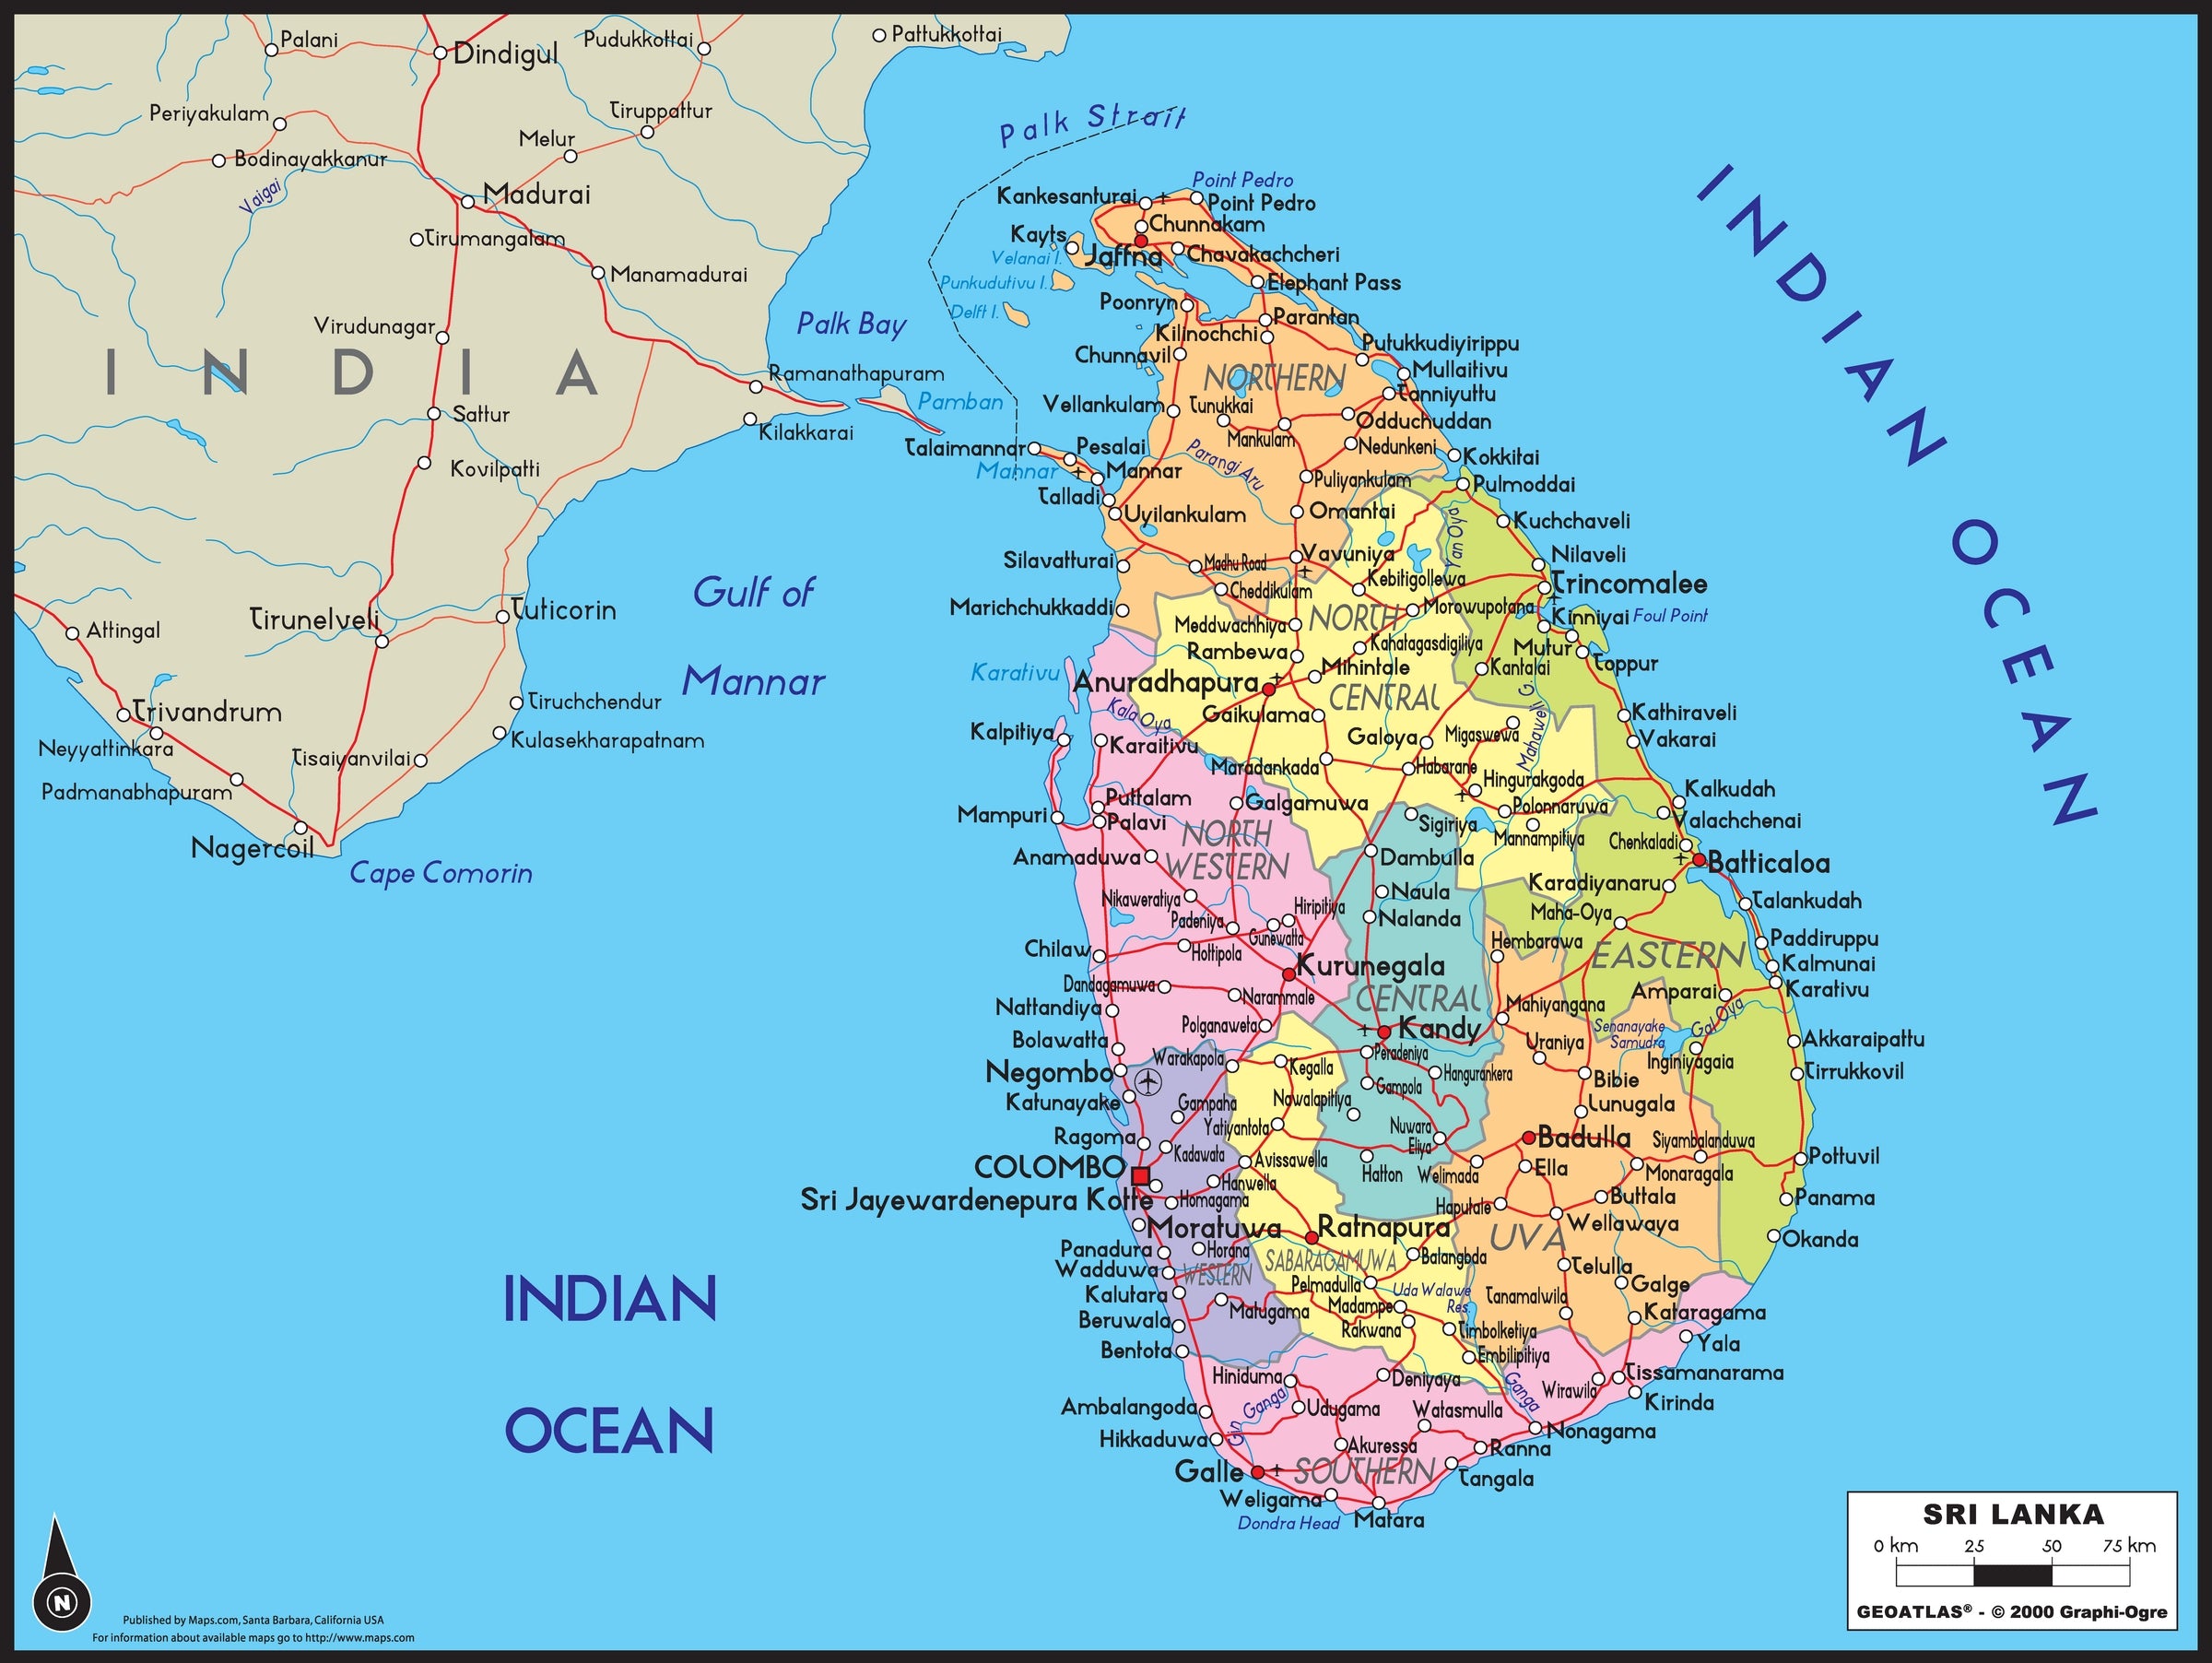 Sri Lanka Political Wall Map | Mapszu.com.com